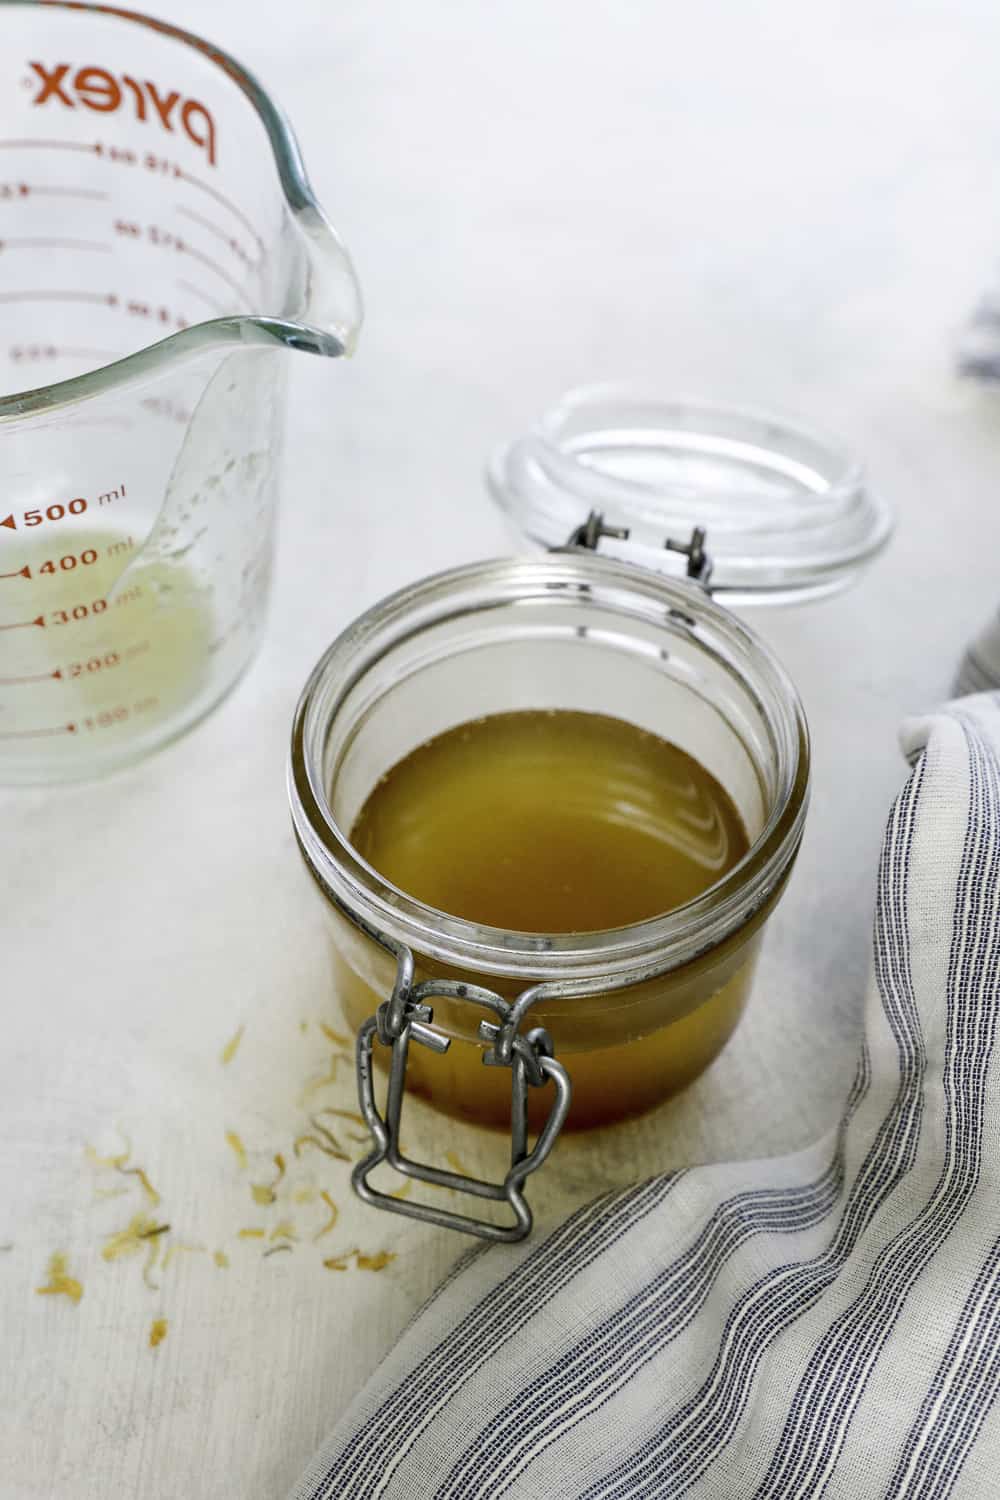 Pour balm into glass jar